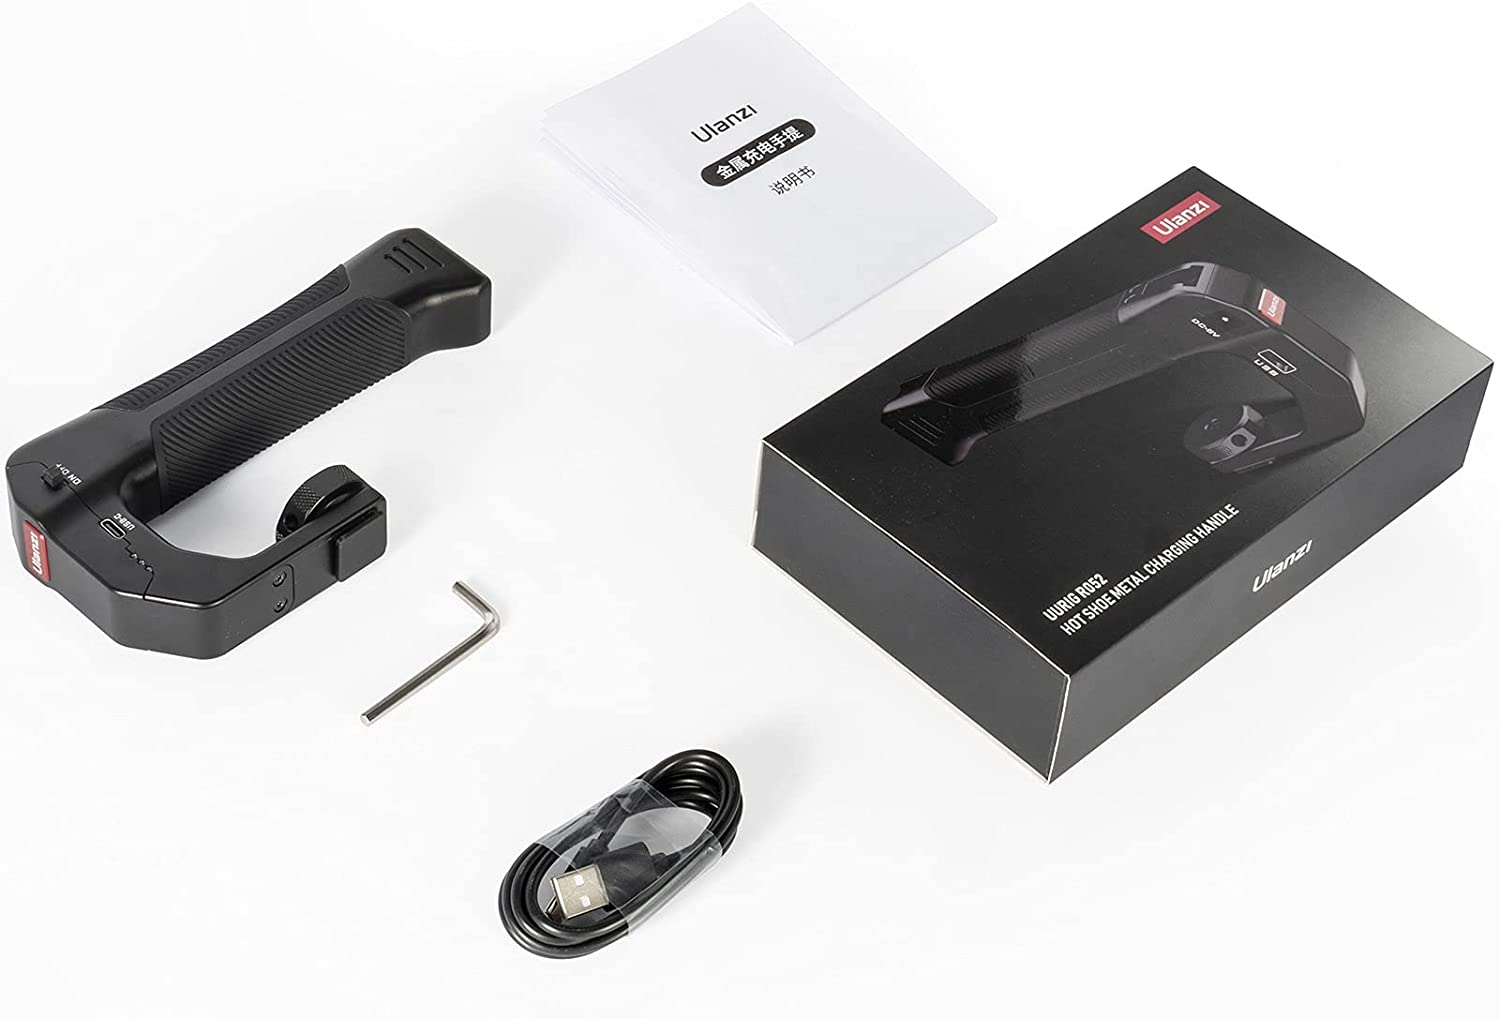 Ручка Ulanzi R052, Cold Shoe Chargeable Top Handle, с аккумулятором 9000mah от Яркий Фотомаркет